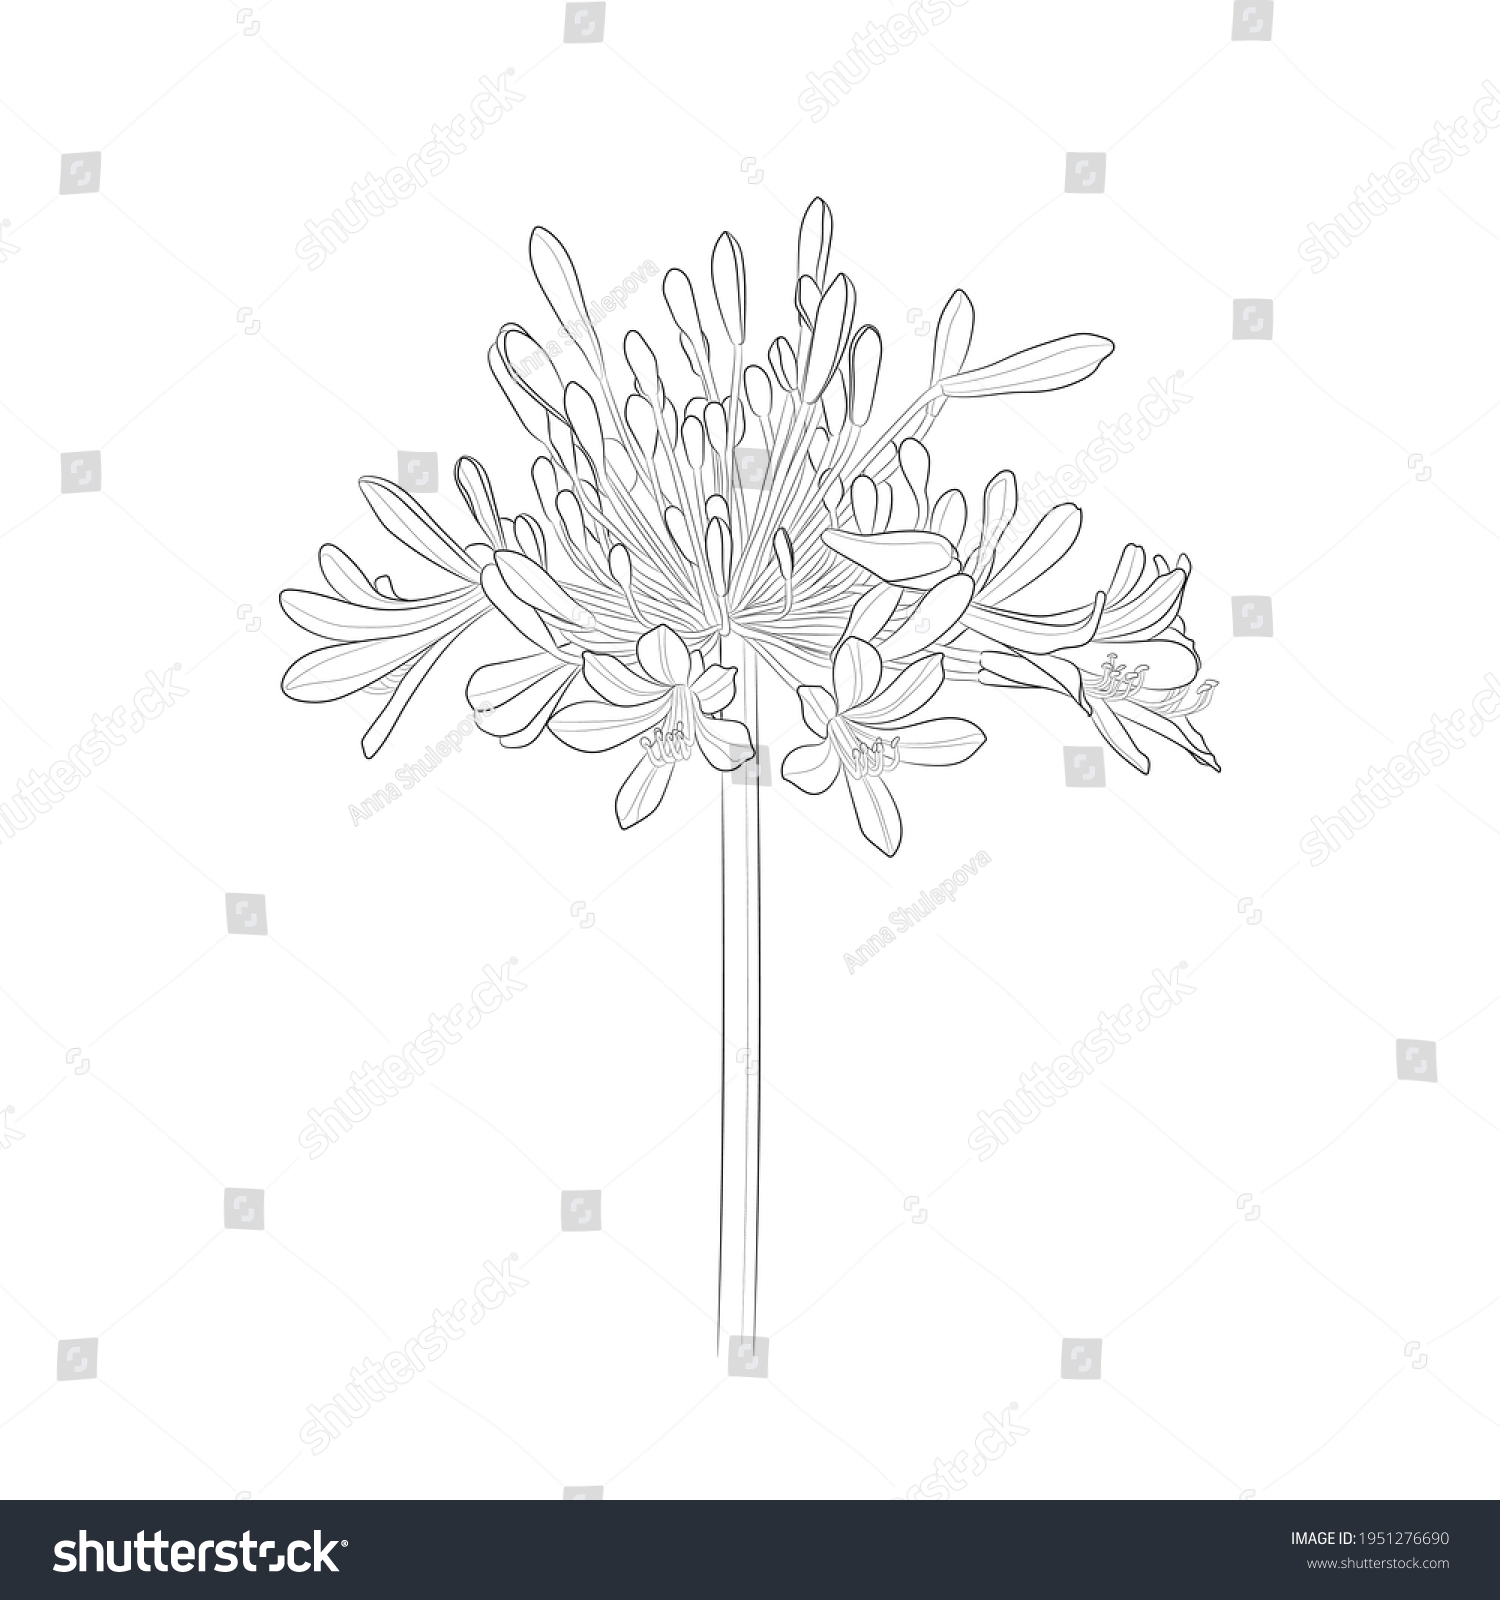 SVG of Lily of the Nile (Agapanthus). Black outline flower on white background. Vector illustration. svg